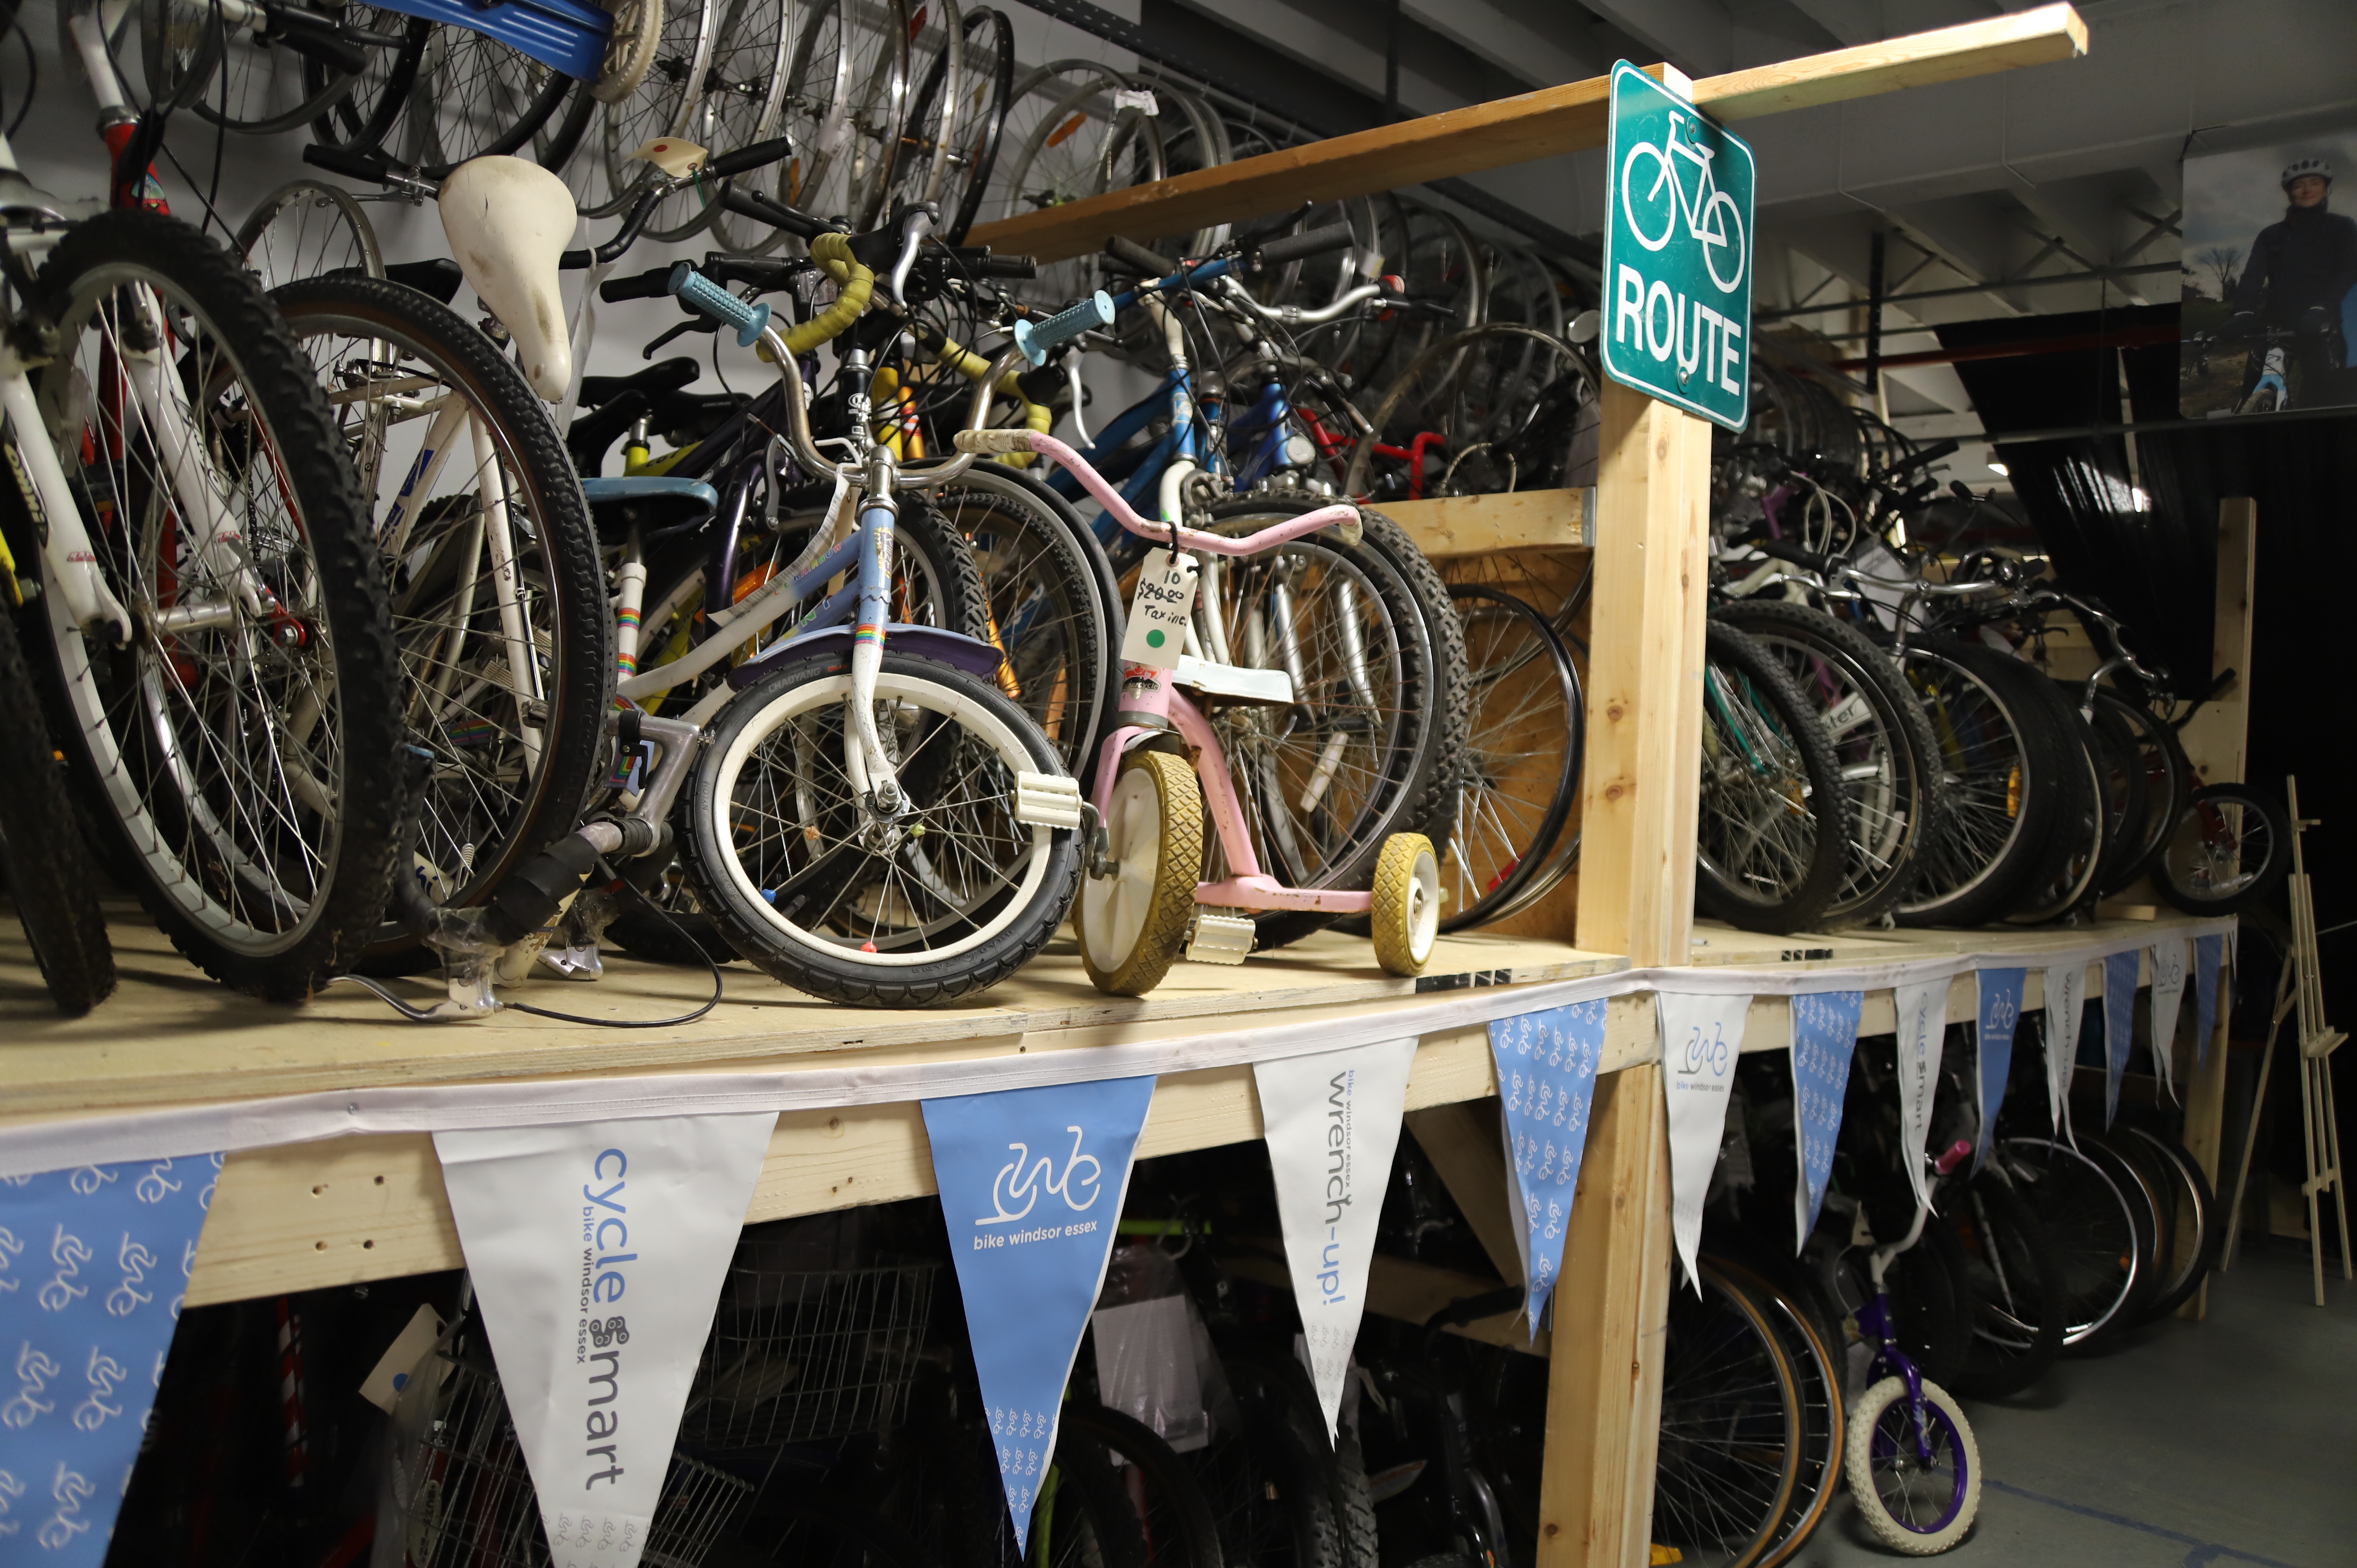 PHOTOS Bike Windsor Essex Bike Kitchen Finds New Home